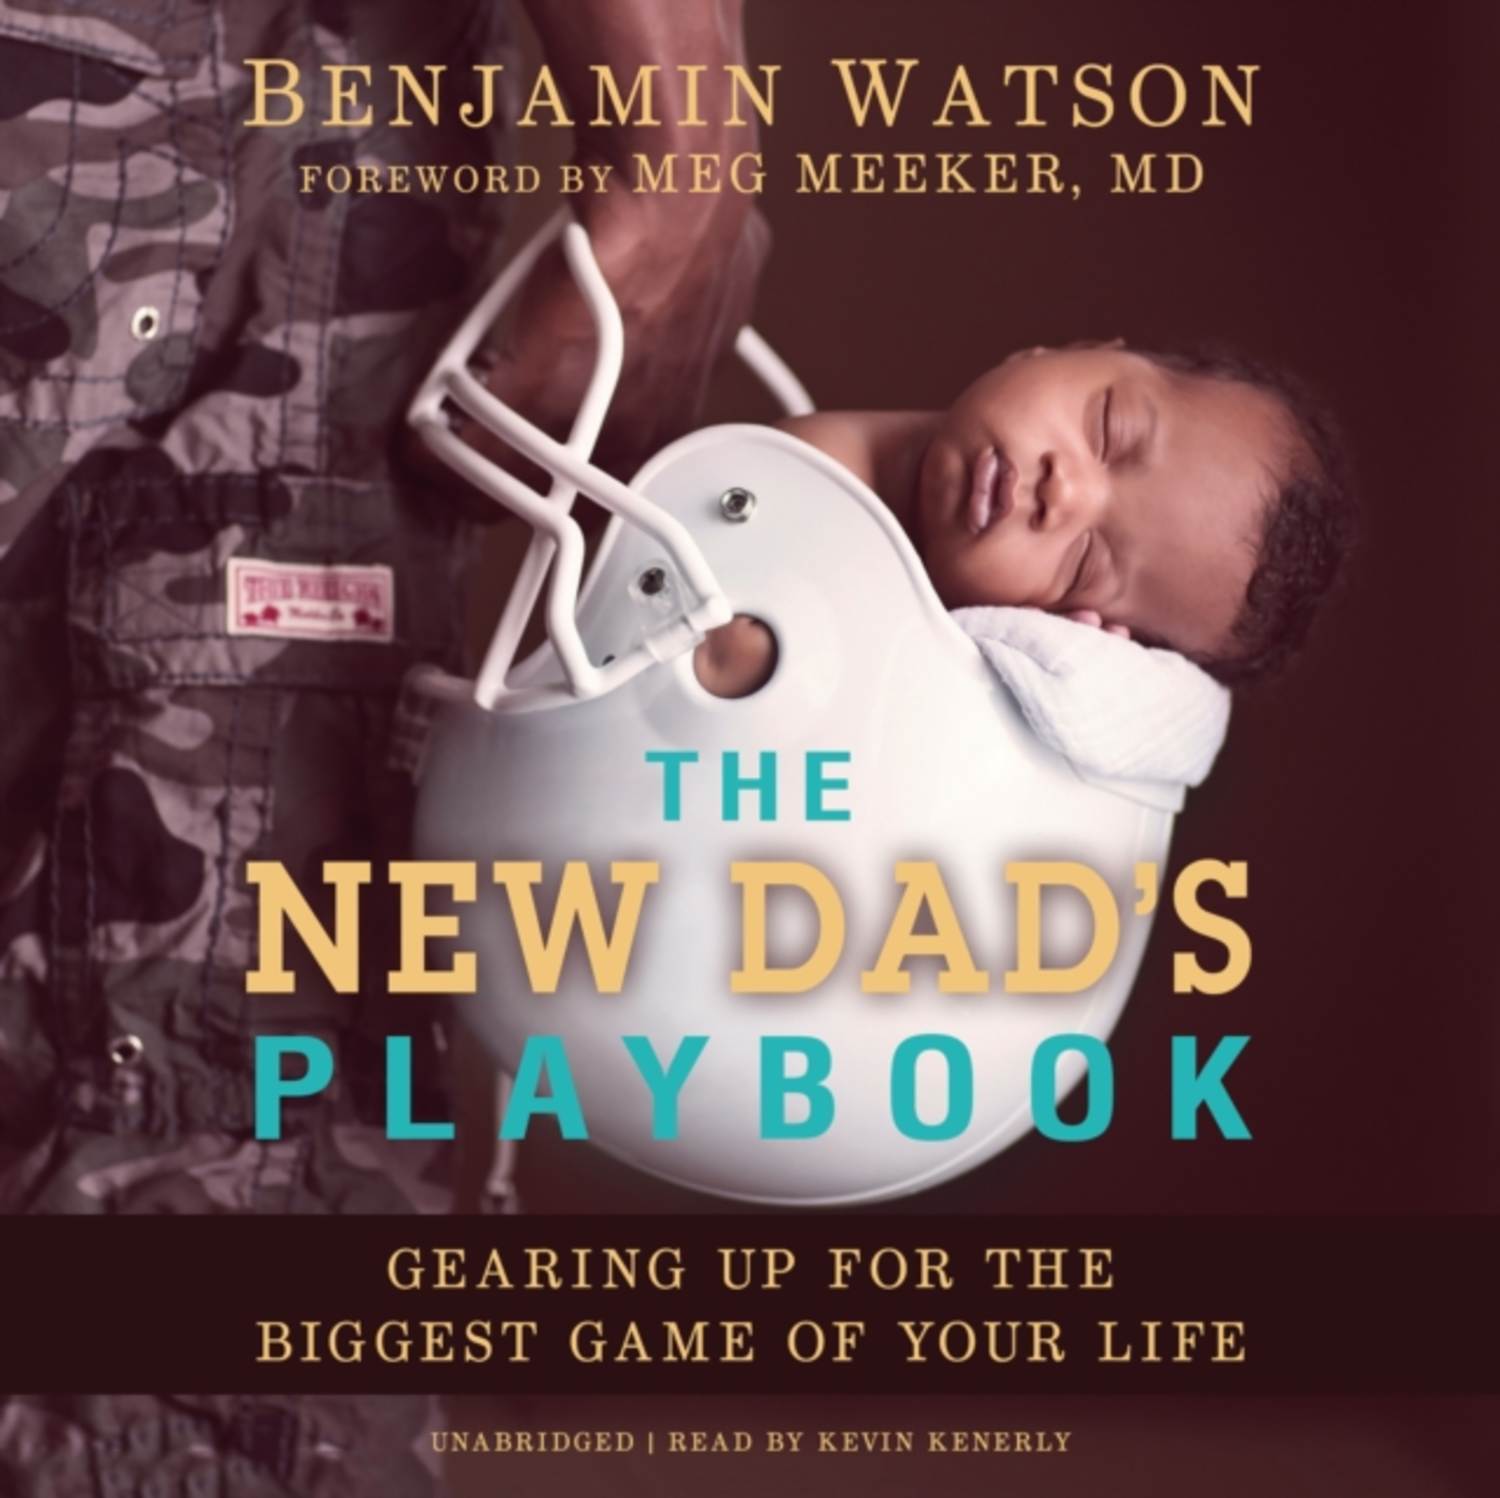 Benjamin Watson. Play book обложка. Аудиокнига новолуние